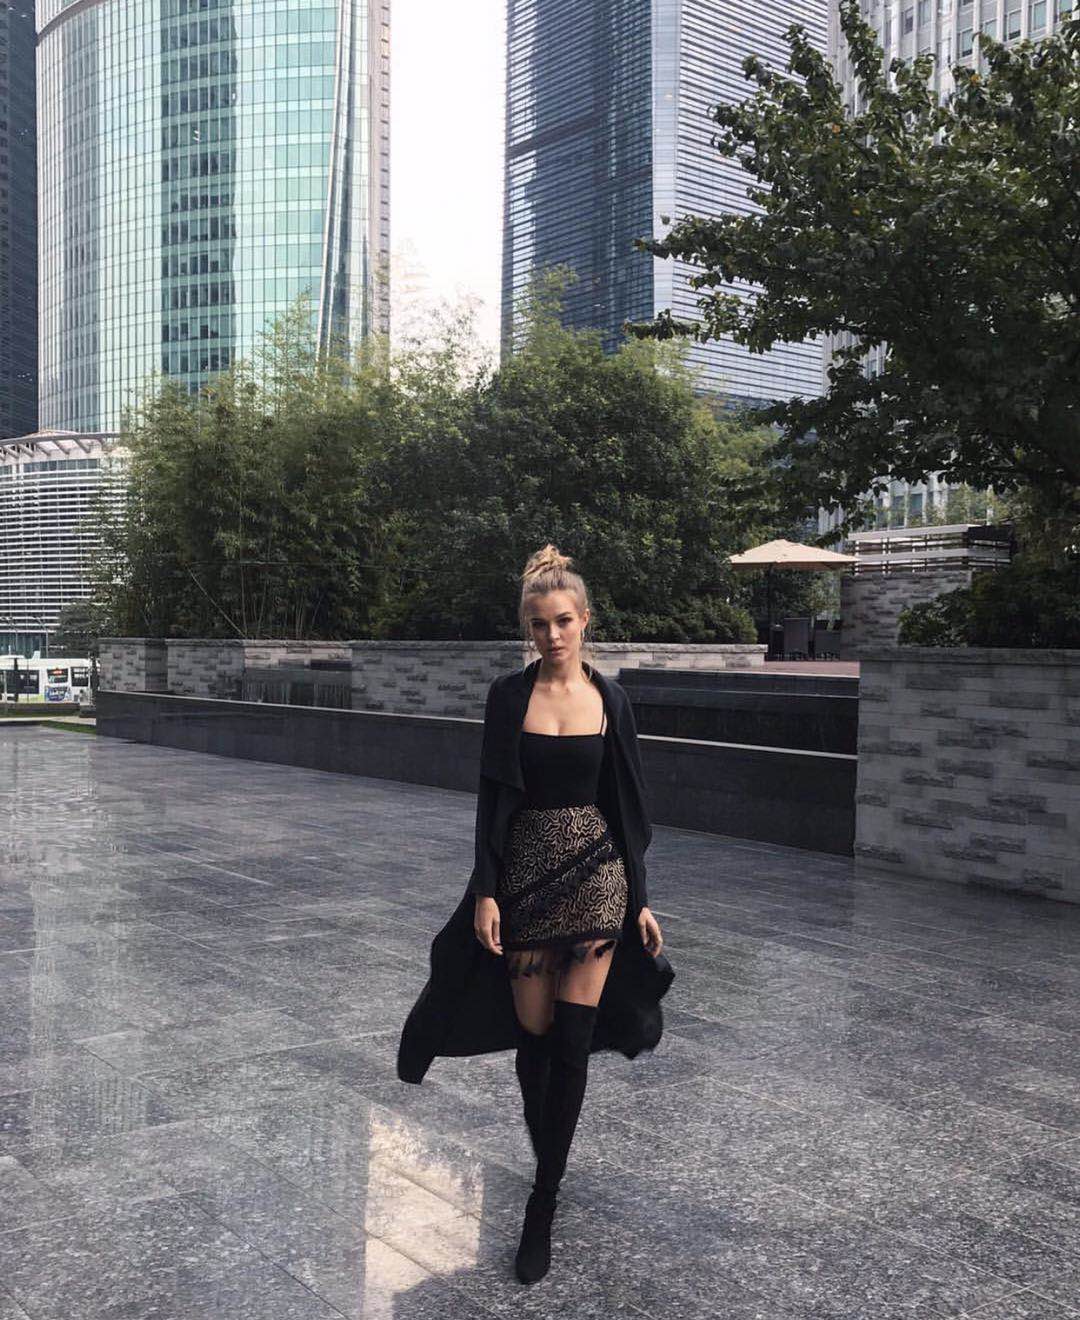 Victoria's Secret Models Arrive in Shanghai – That’s Shanghai